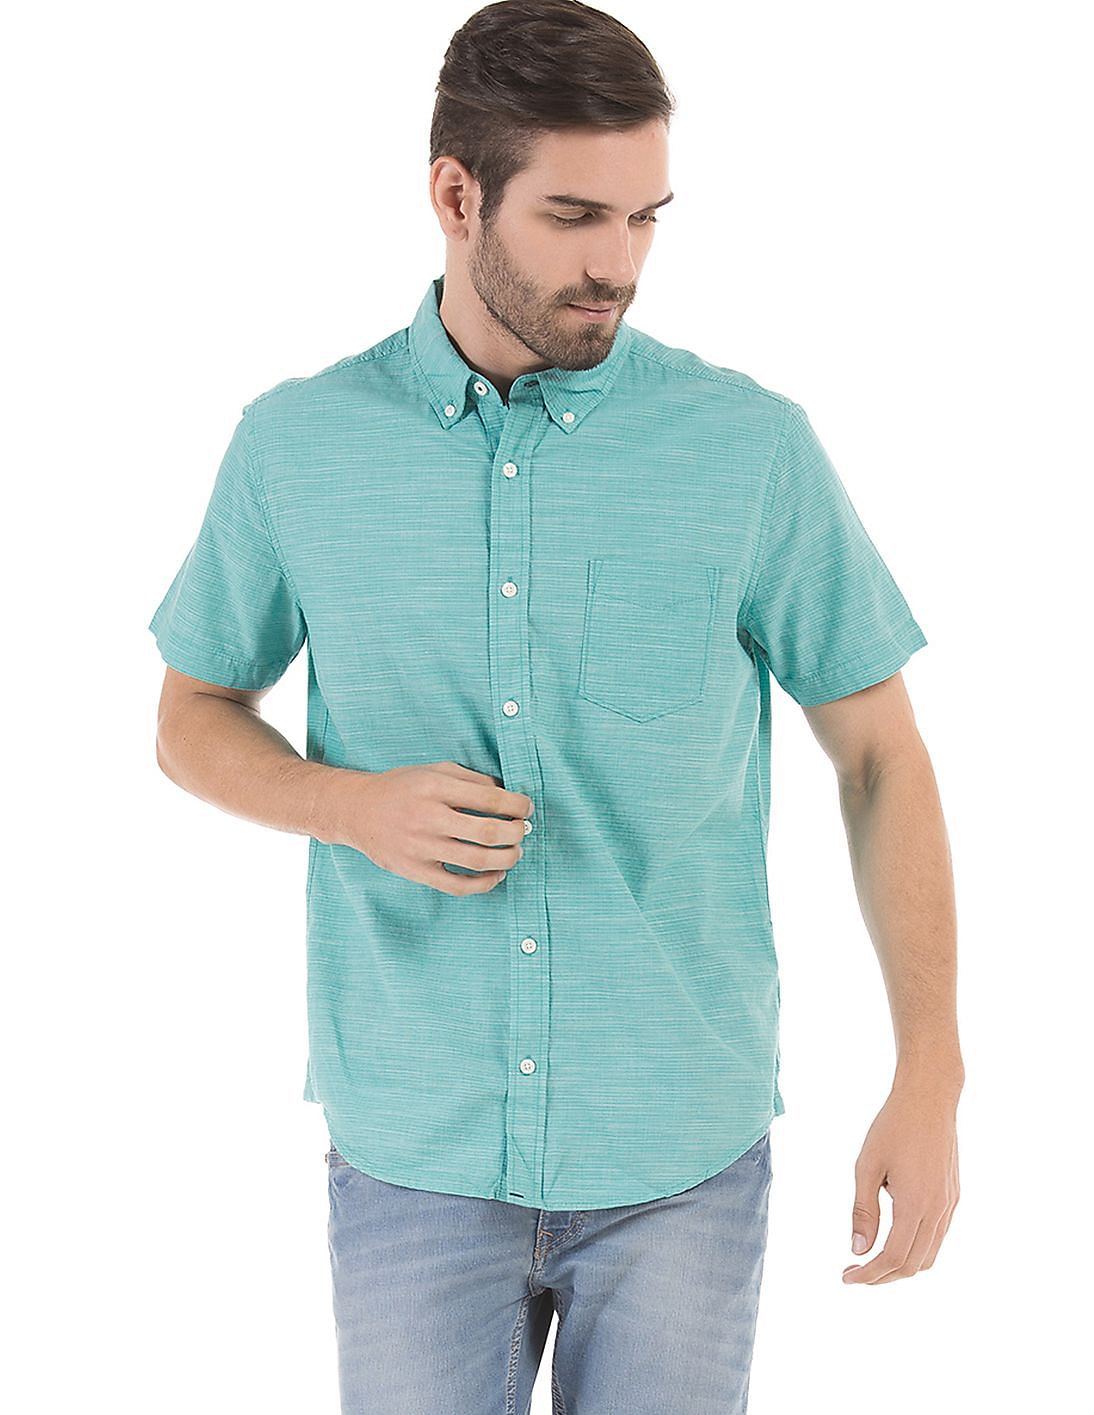 Buy Aeropostale Button Down Short Sleeve Shirt - NNNOW.com